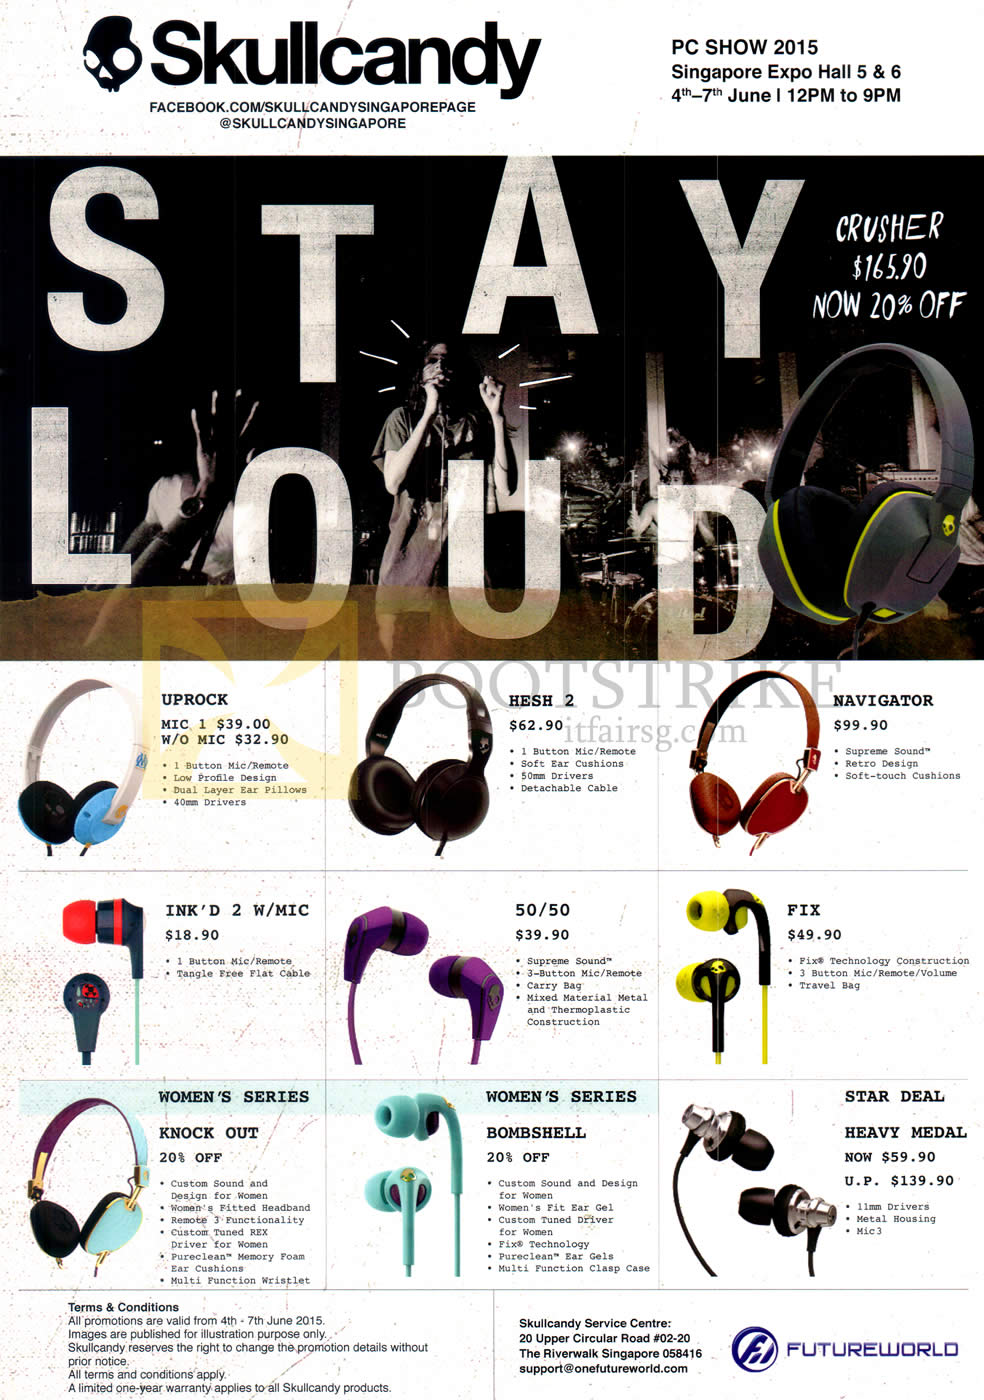 PC SHOW 2015 price list image brochure of Skullcandy Headphones, Earphones, Uprock, Hesh2, Navigator, Ink D 2, 50 50, Fix, Knock Out, Bombshell, Heavy Medal